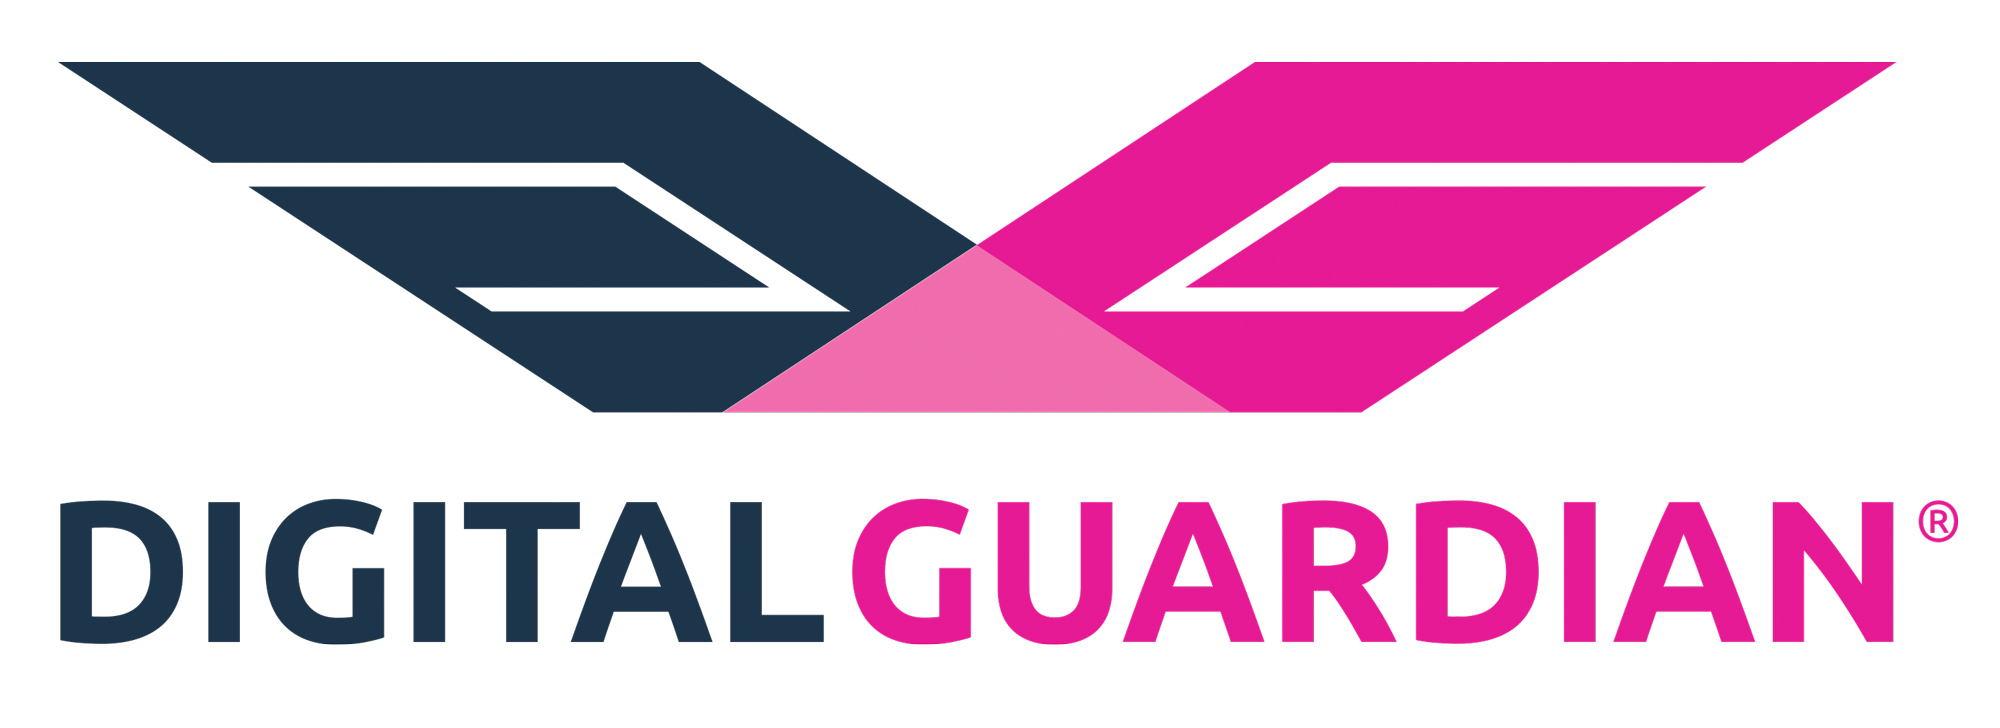 digital guardian logo